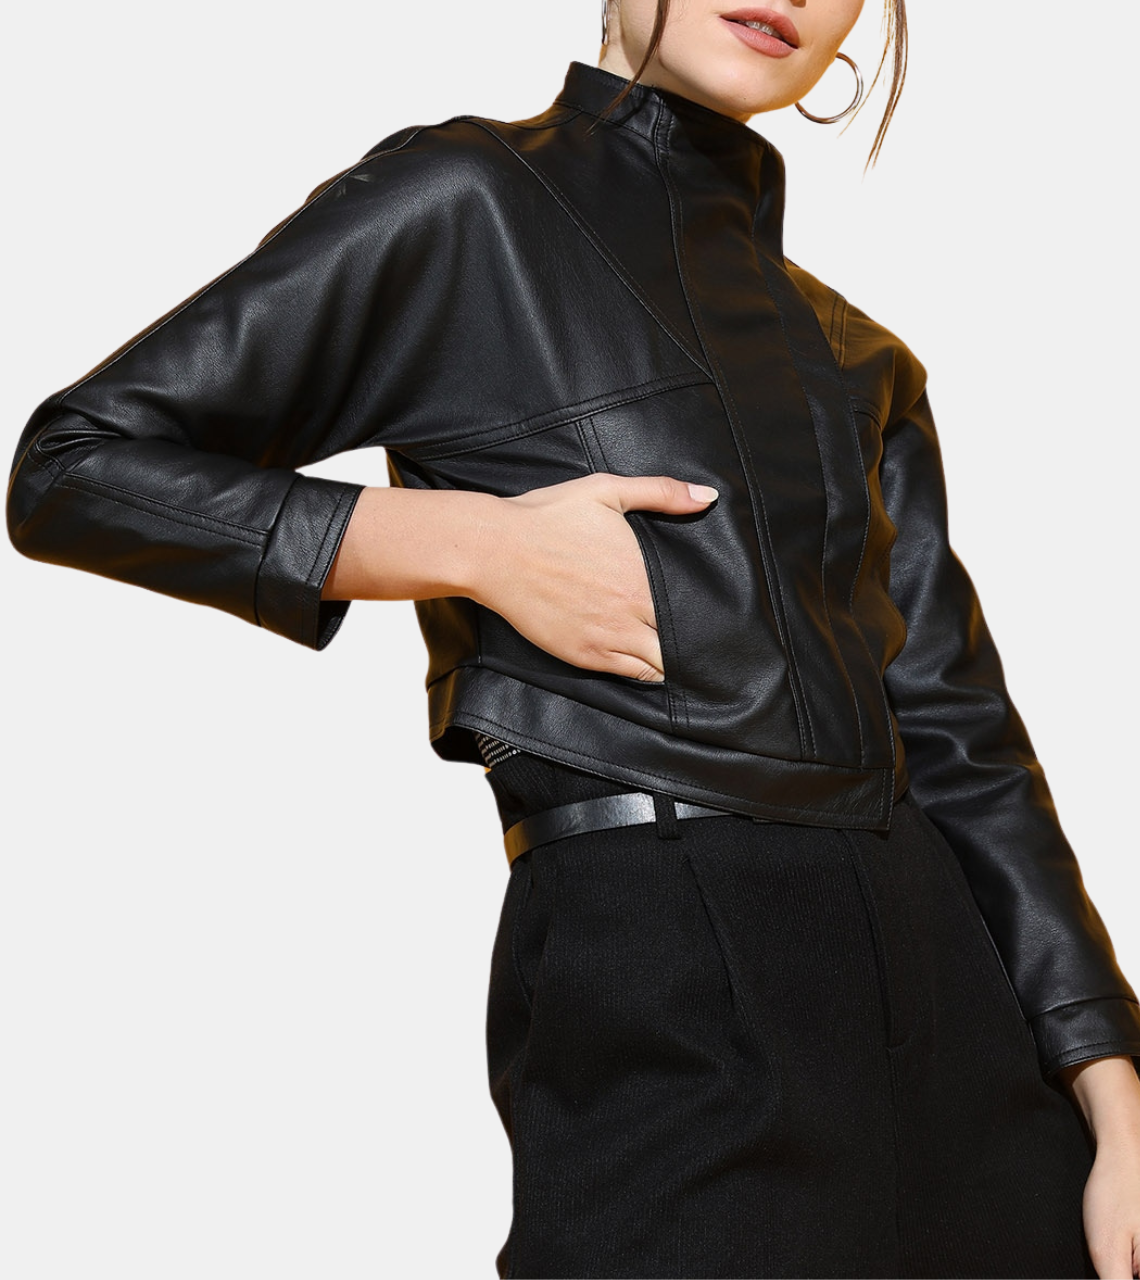 Maven Women's Black Cropped Leather Jacket